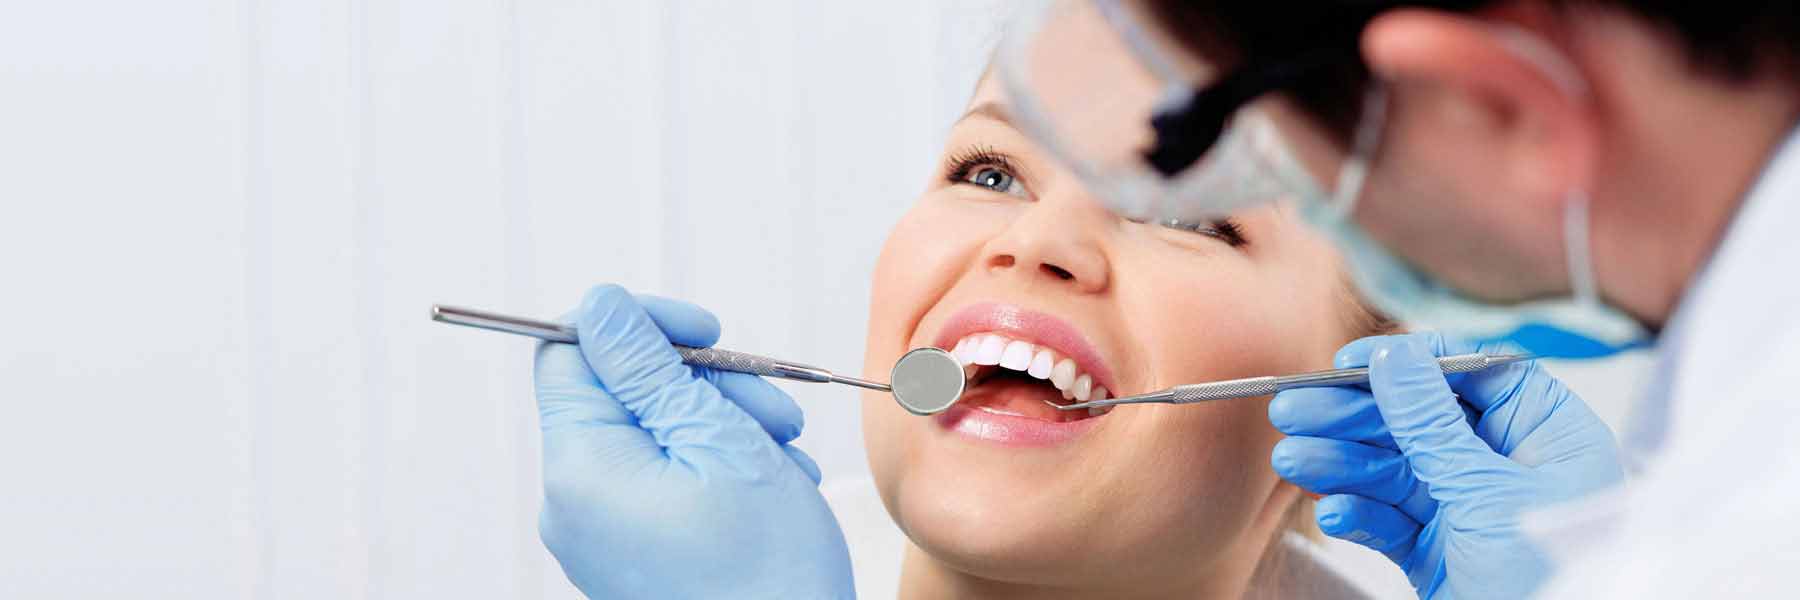 Dental Service in Tenambit - Tooth N Care